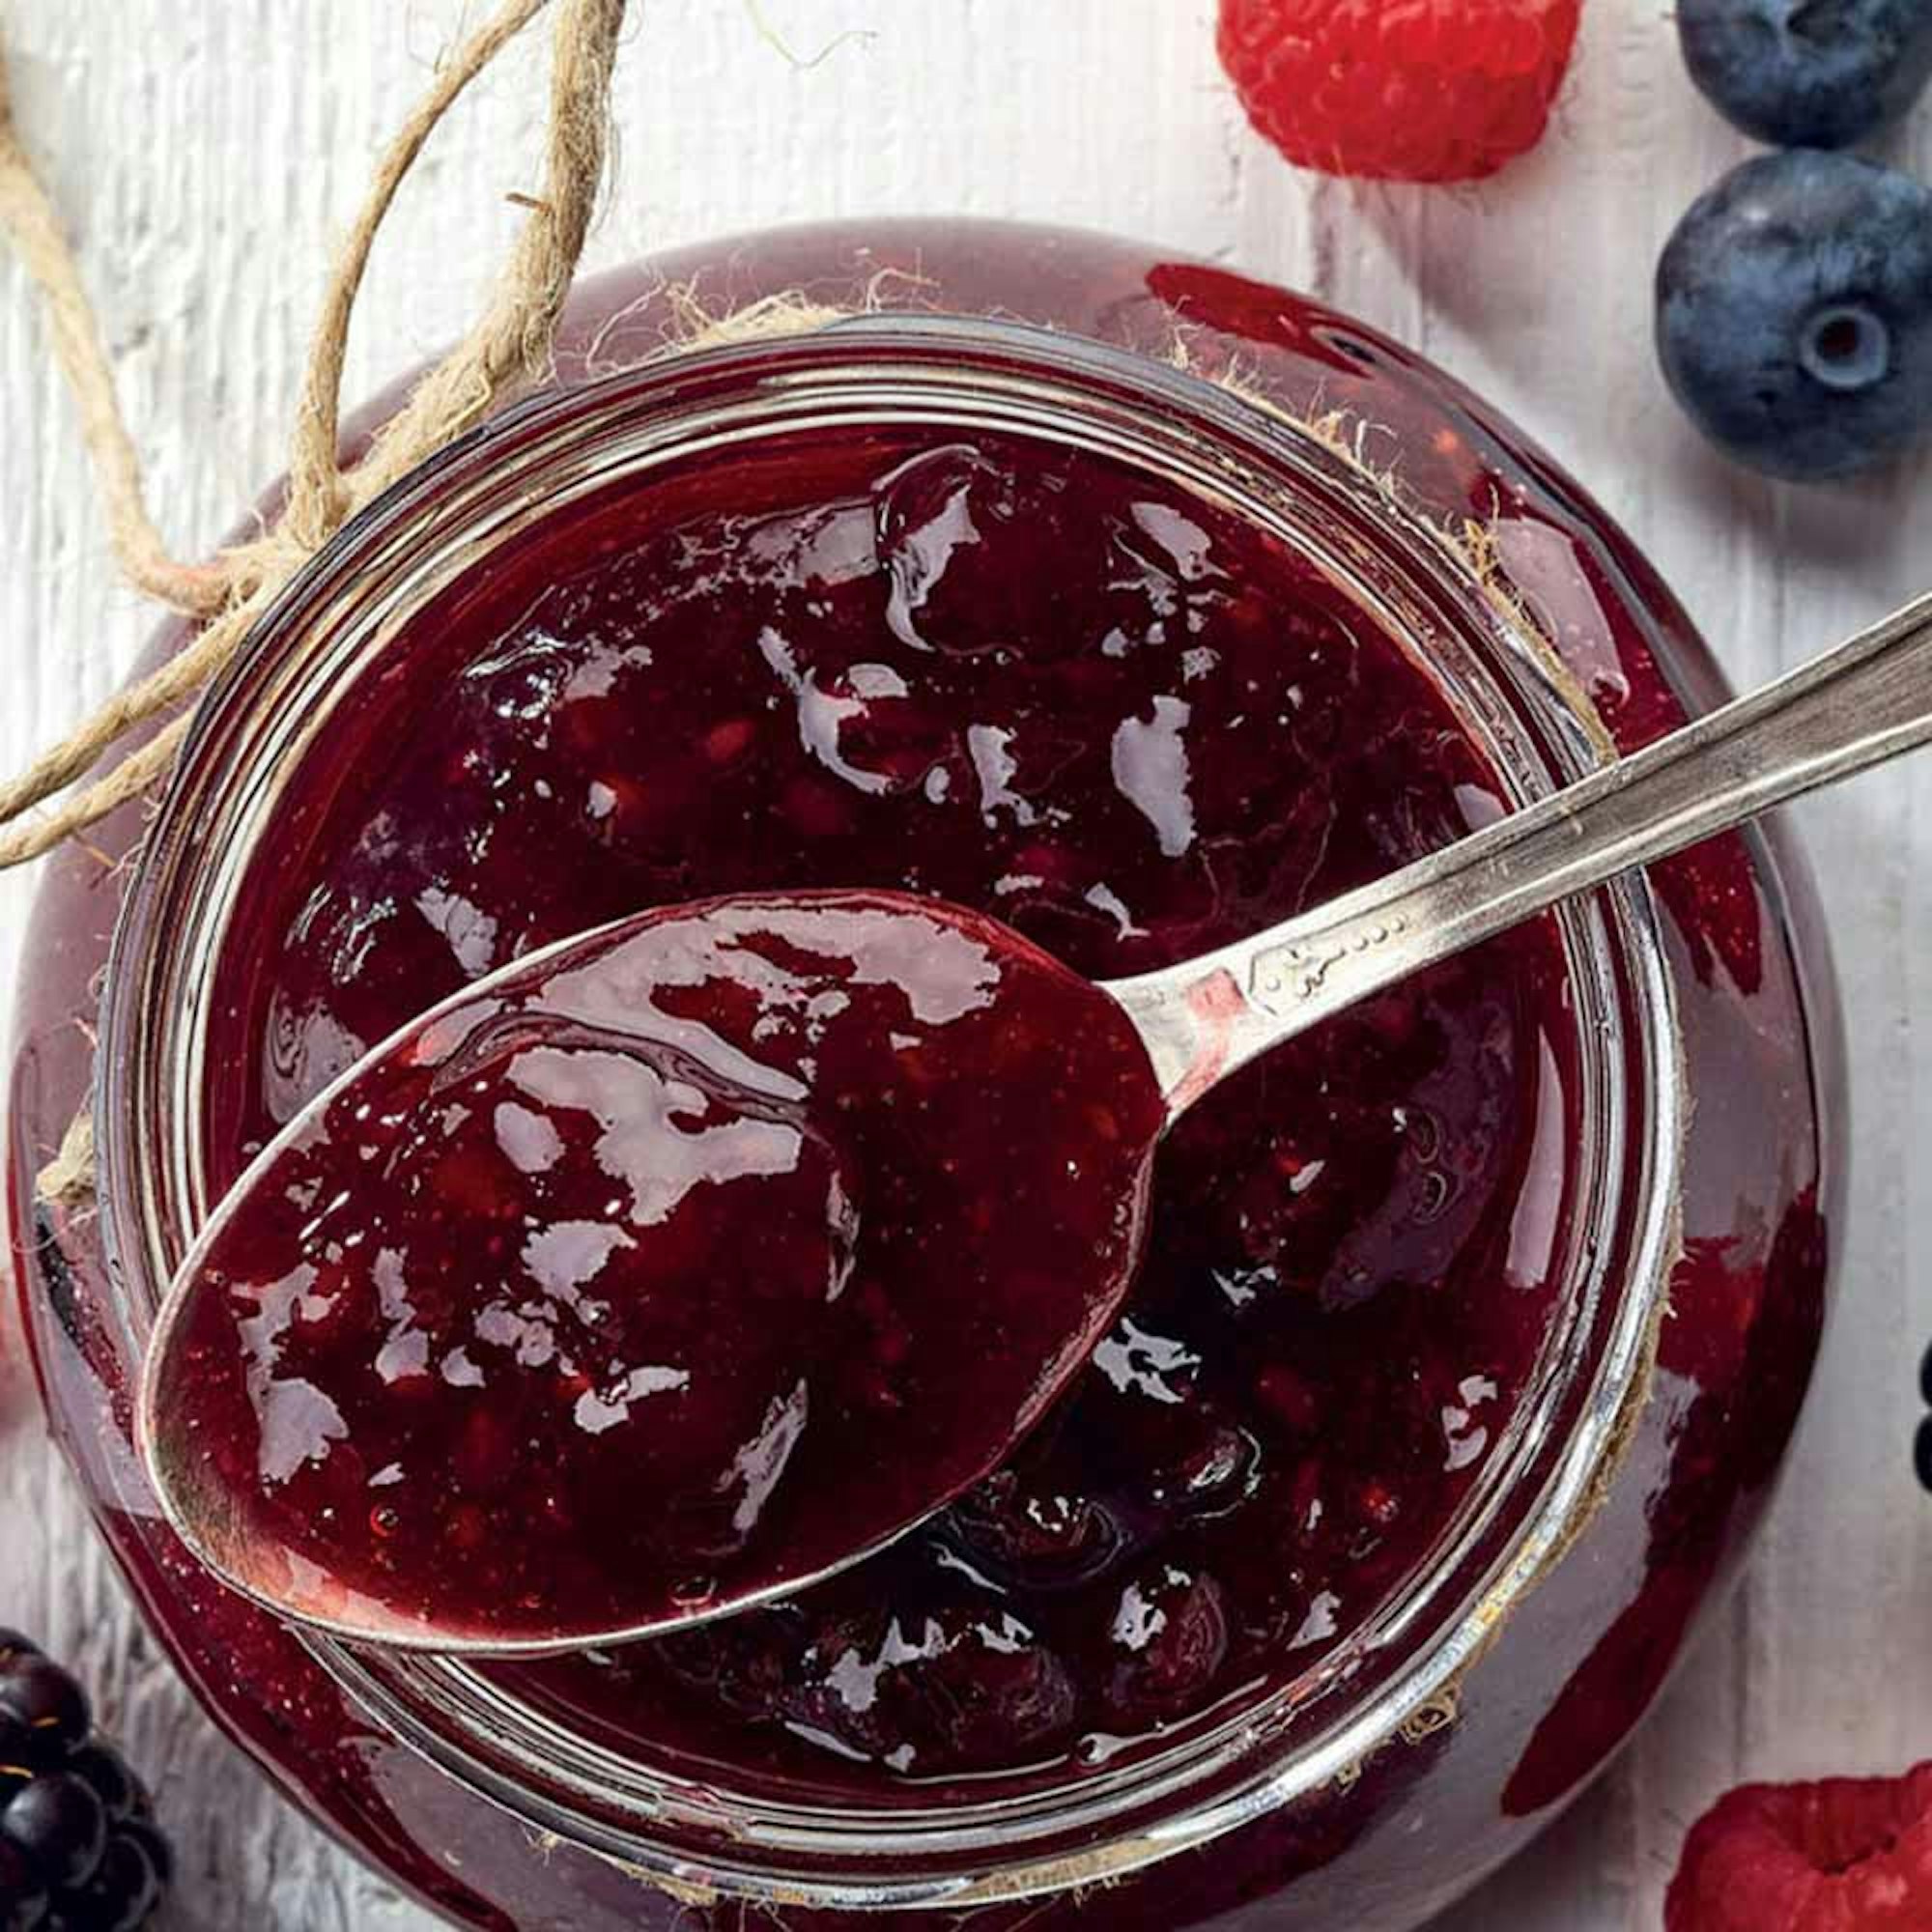 Mixed berry jam recipe | Robins Kitchen blog